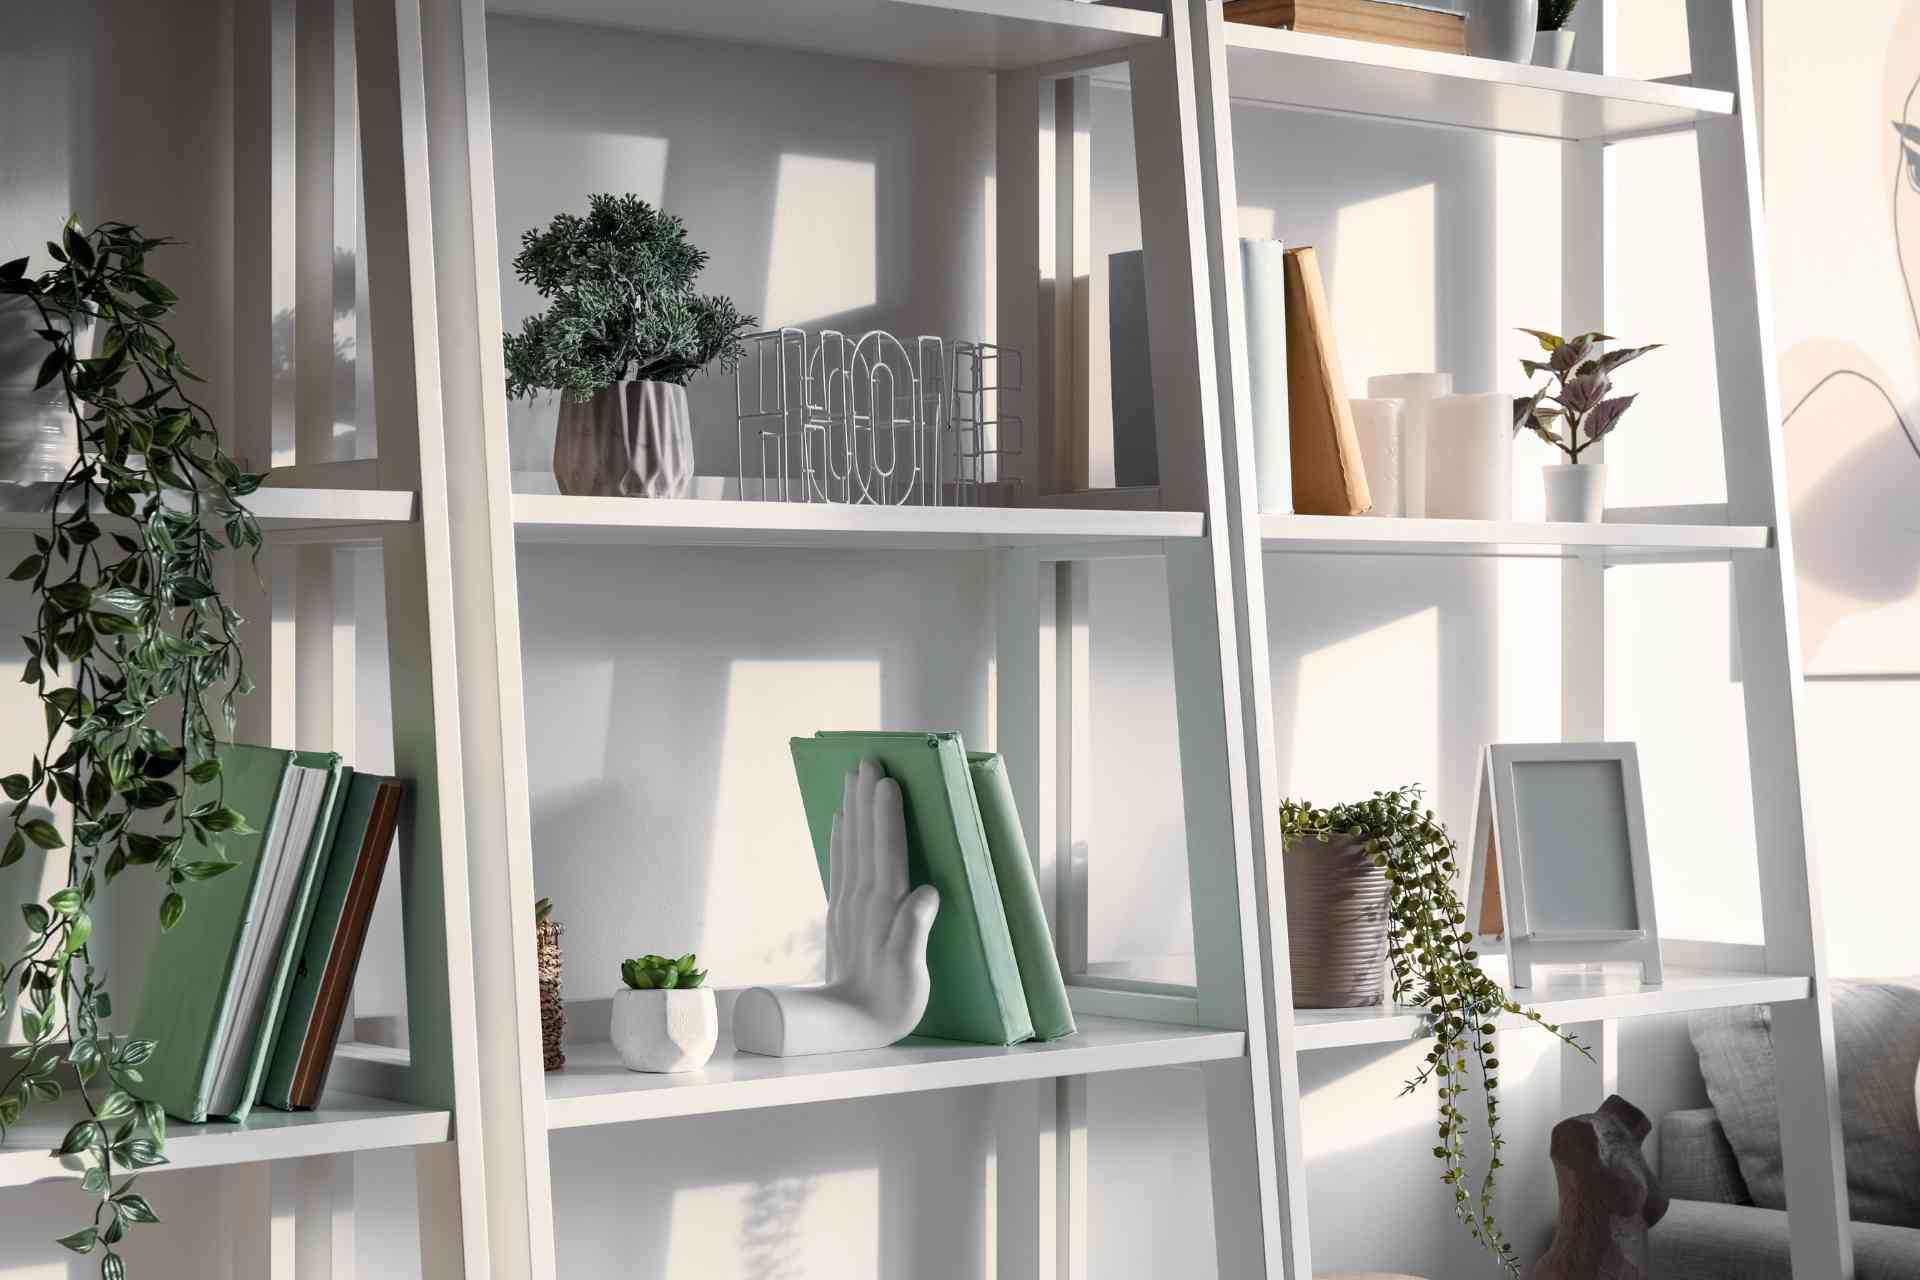 Artificial plants adorning living room shelves